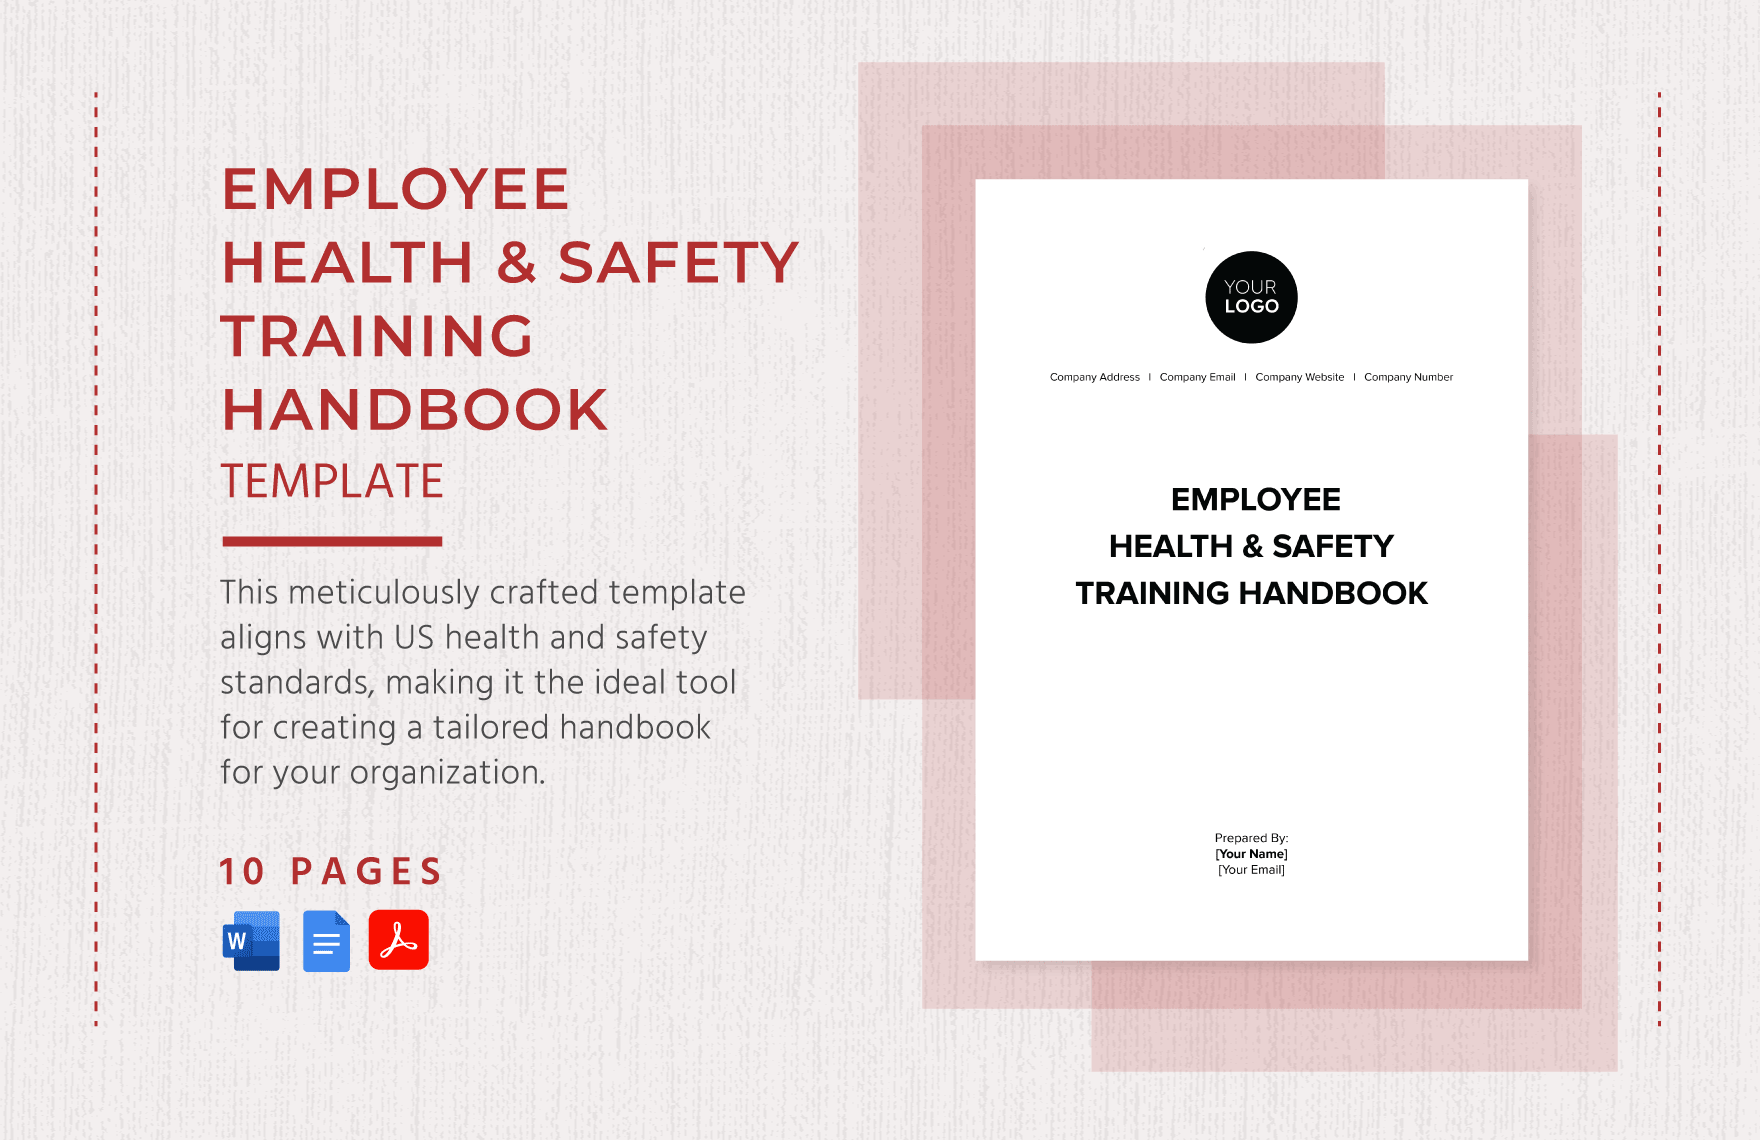 Employee Health & Safety Training Handbook Template